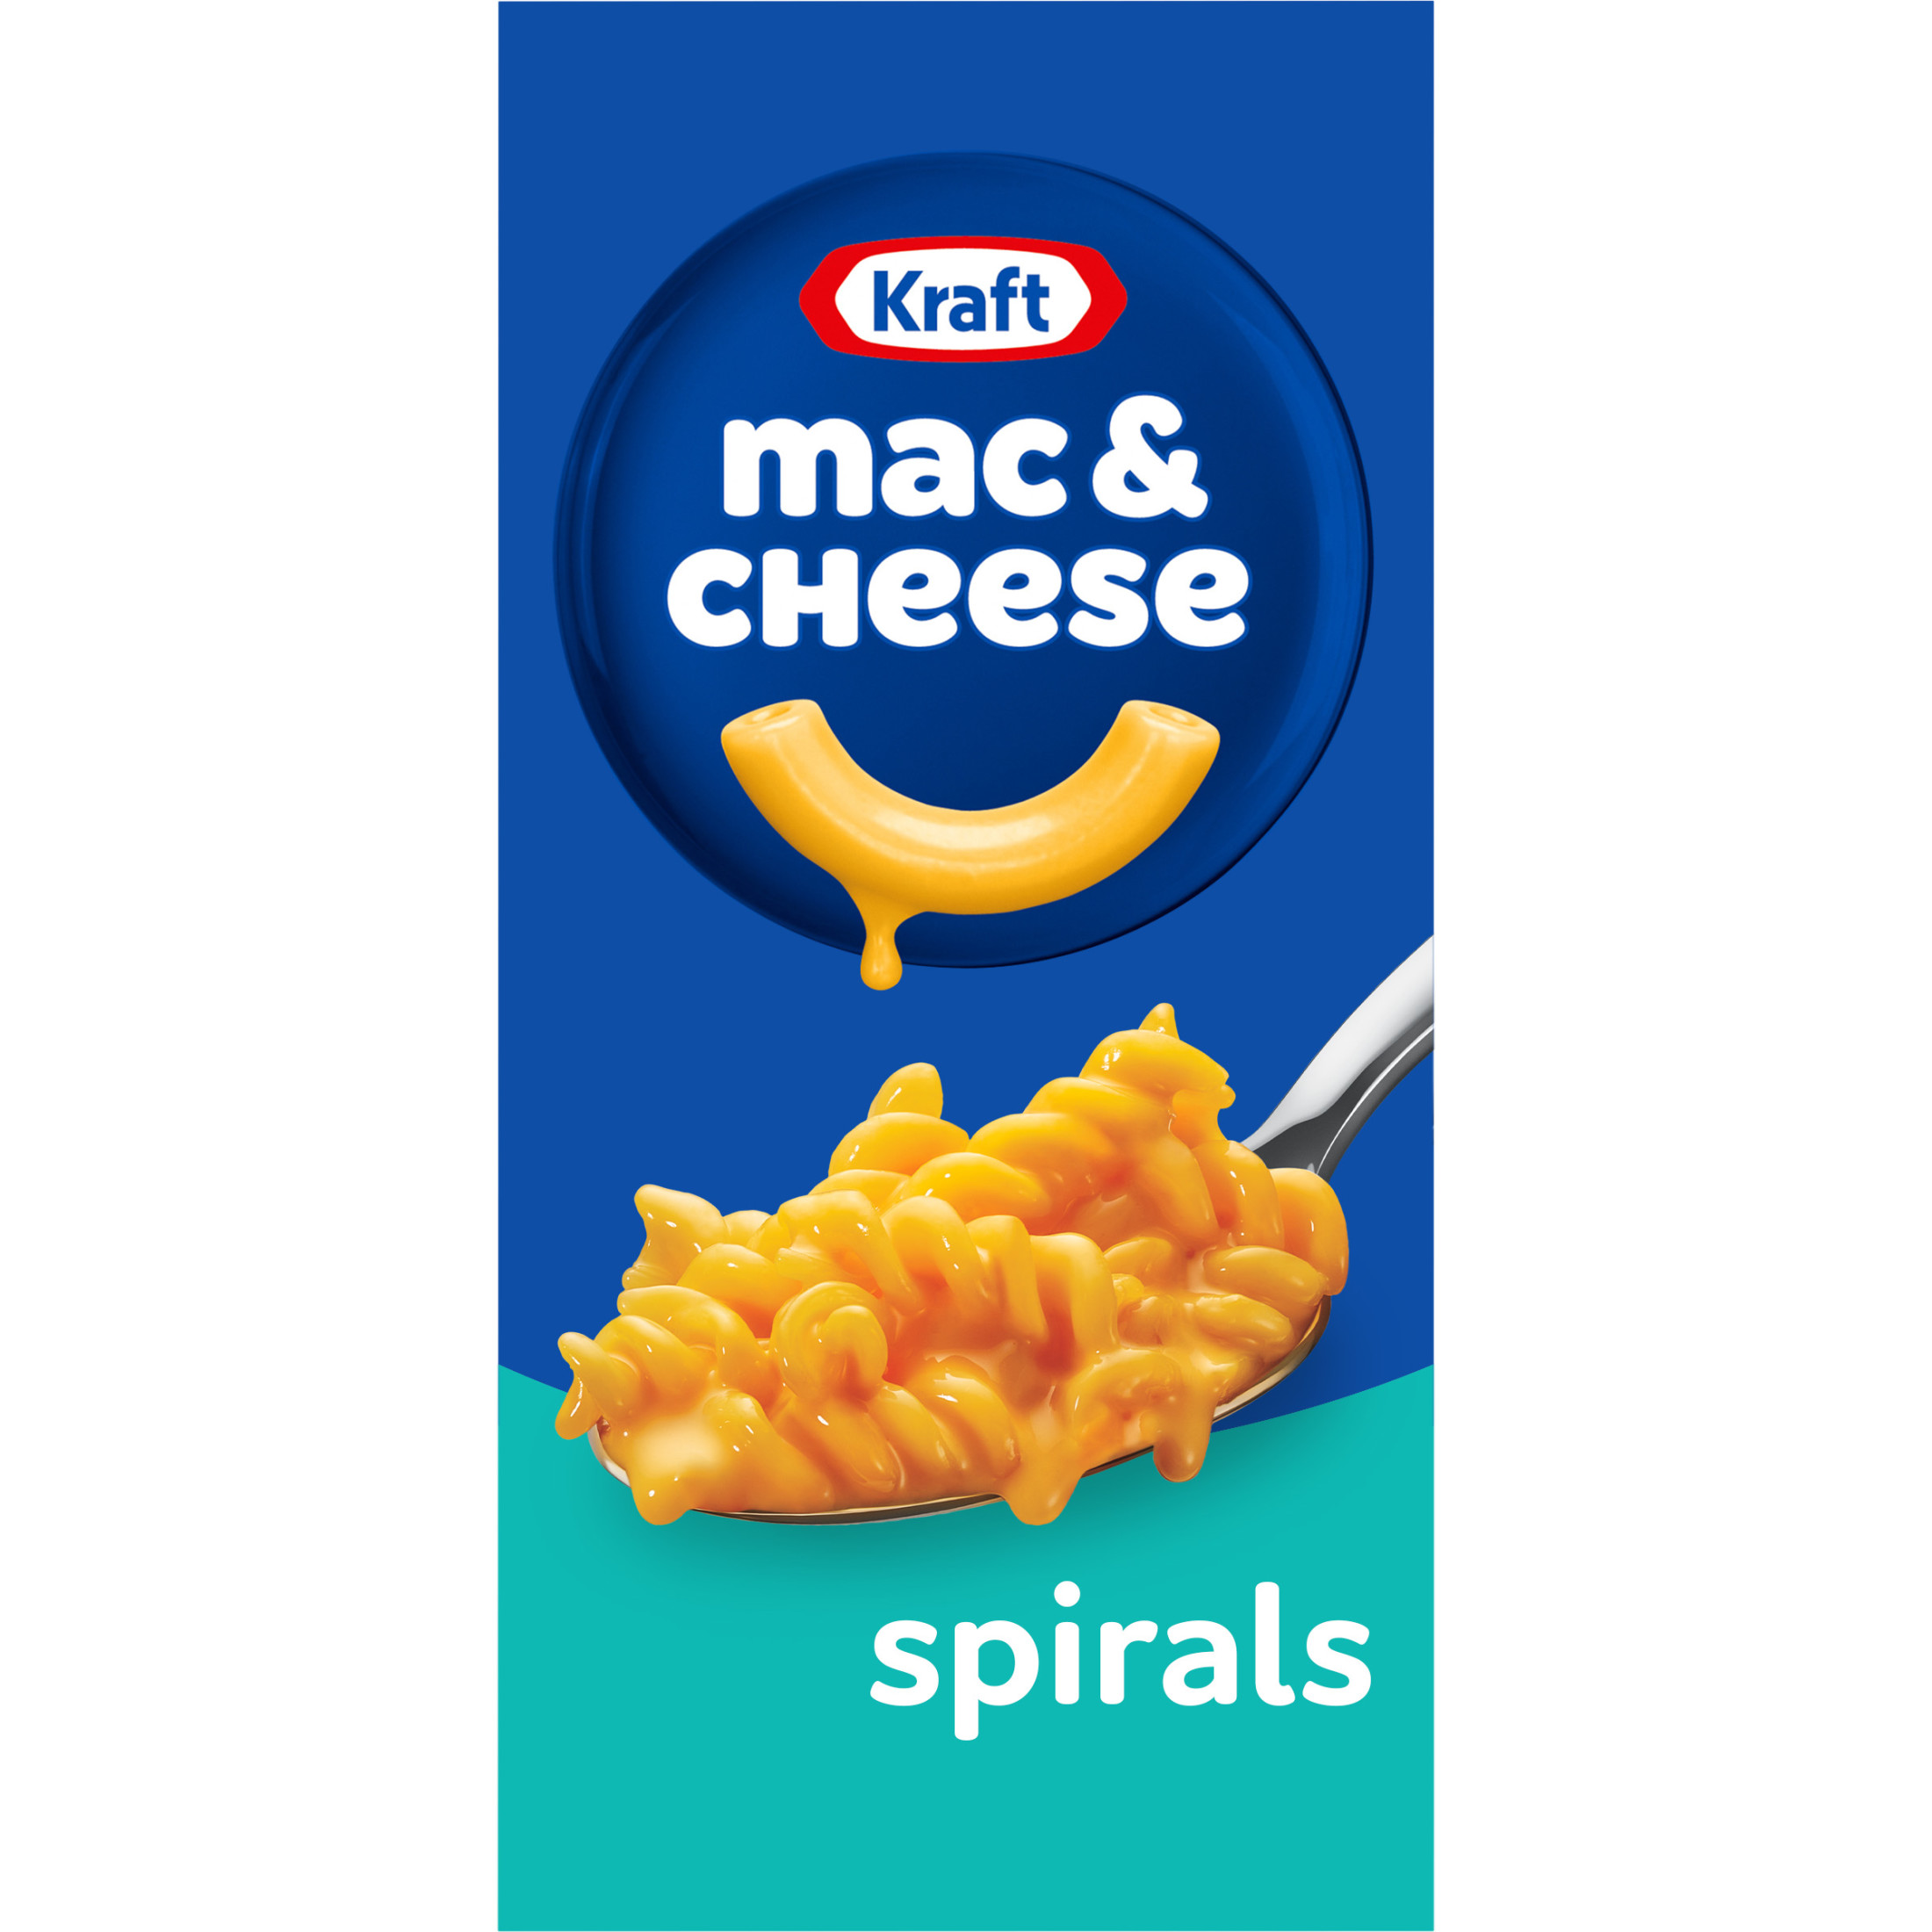 Kraft Spirals Original Mac N Cheese Macaroni and Cheese Dinner, 5.5 oz Box - image 1 of 14